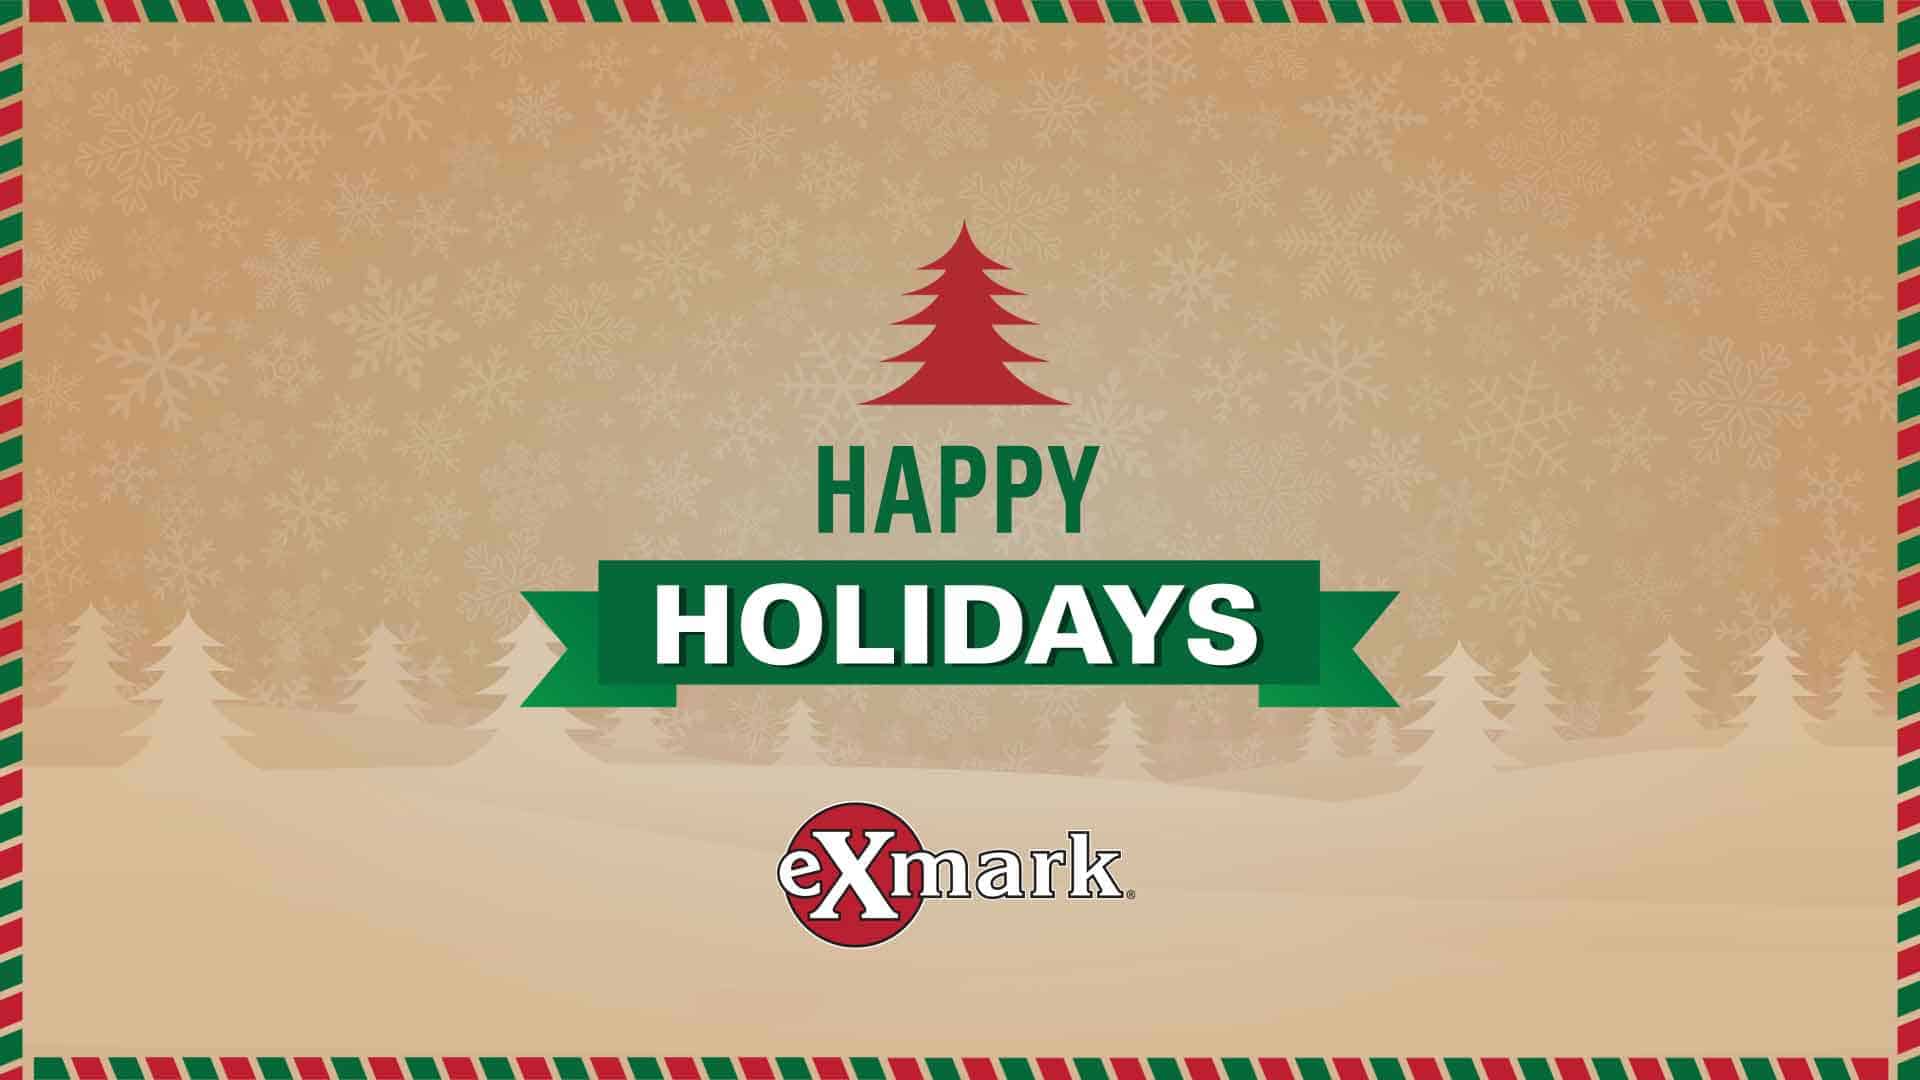 Happy Holidays from Exmark and The Backyard Life Ambassadors